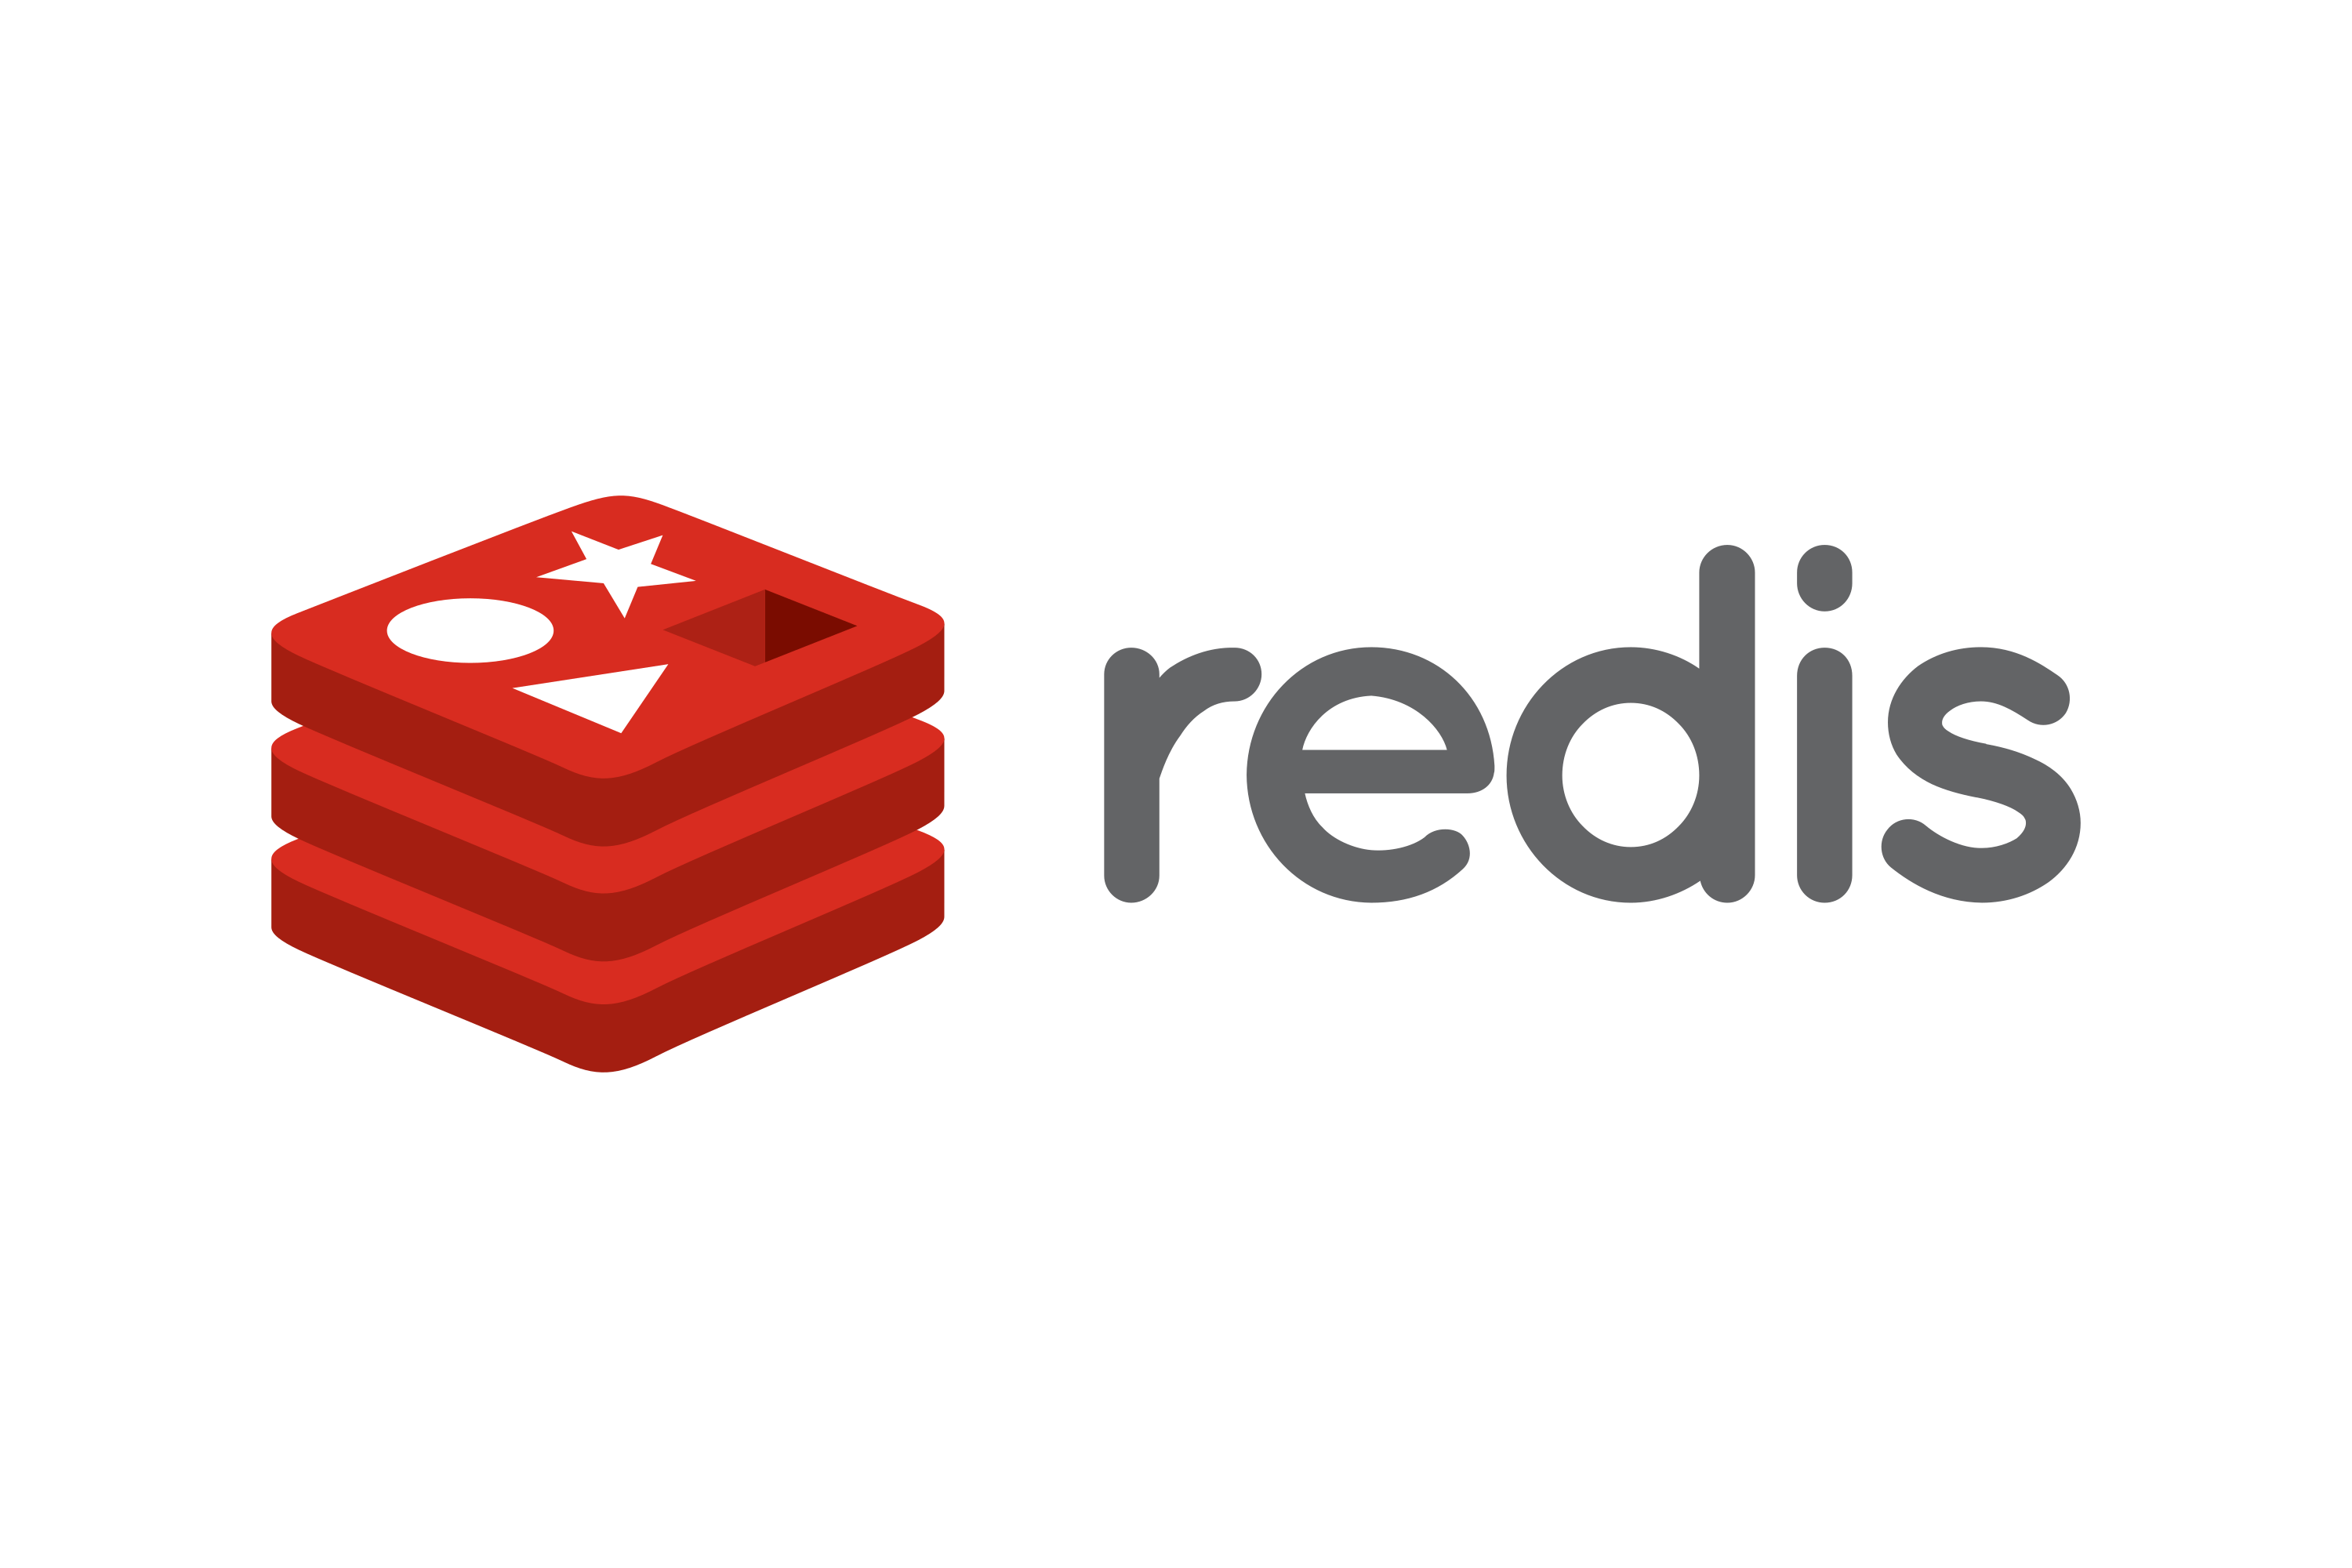 Redis-Logo.wine